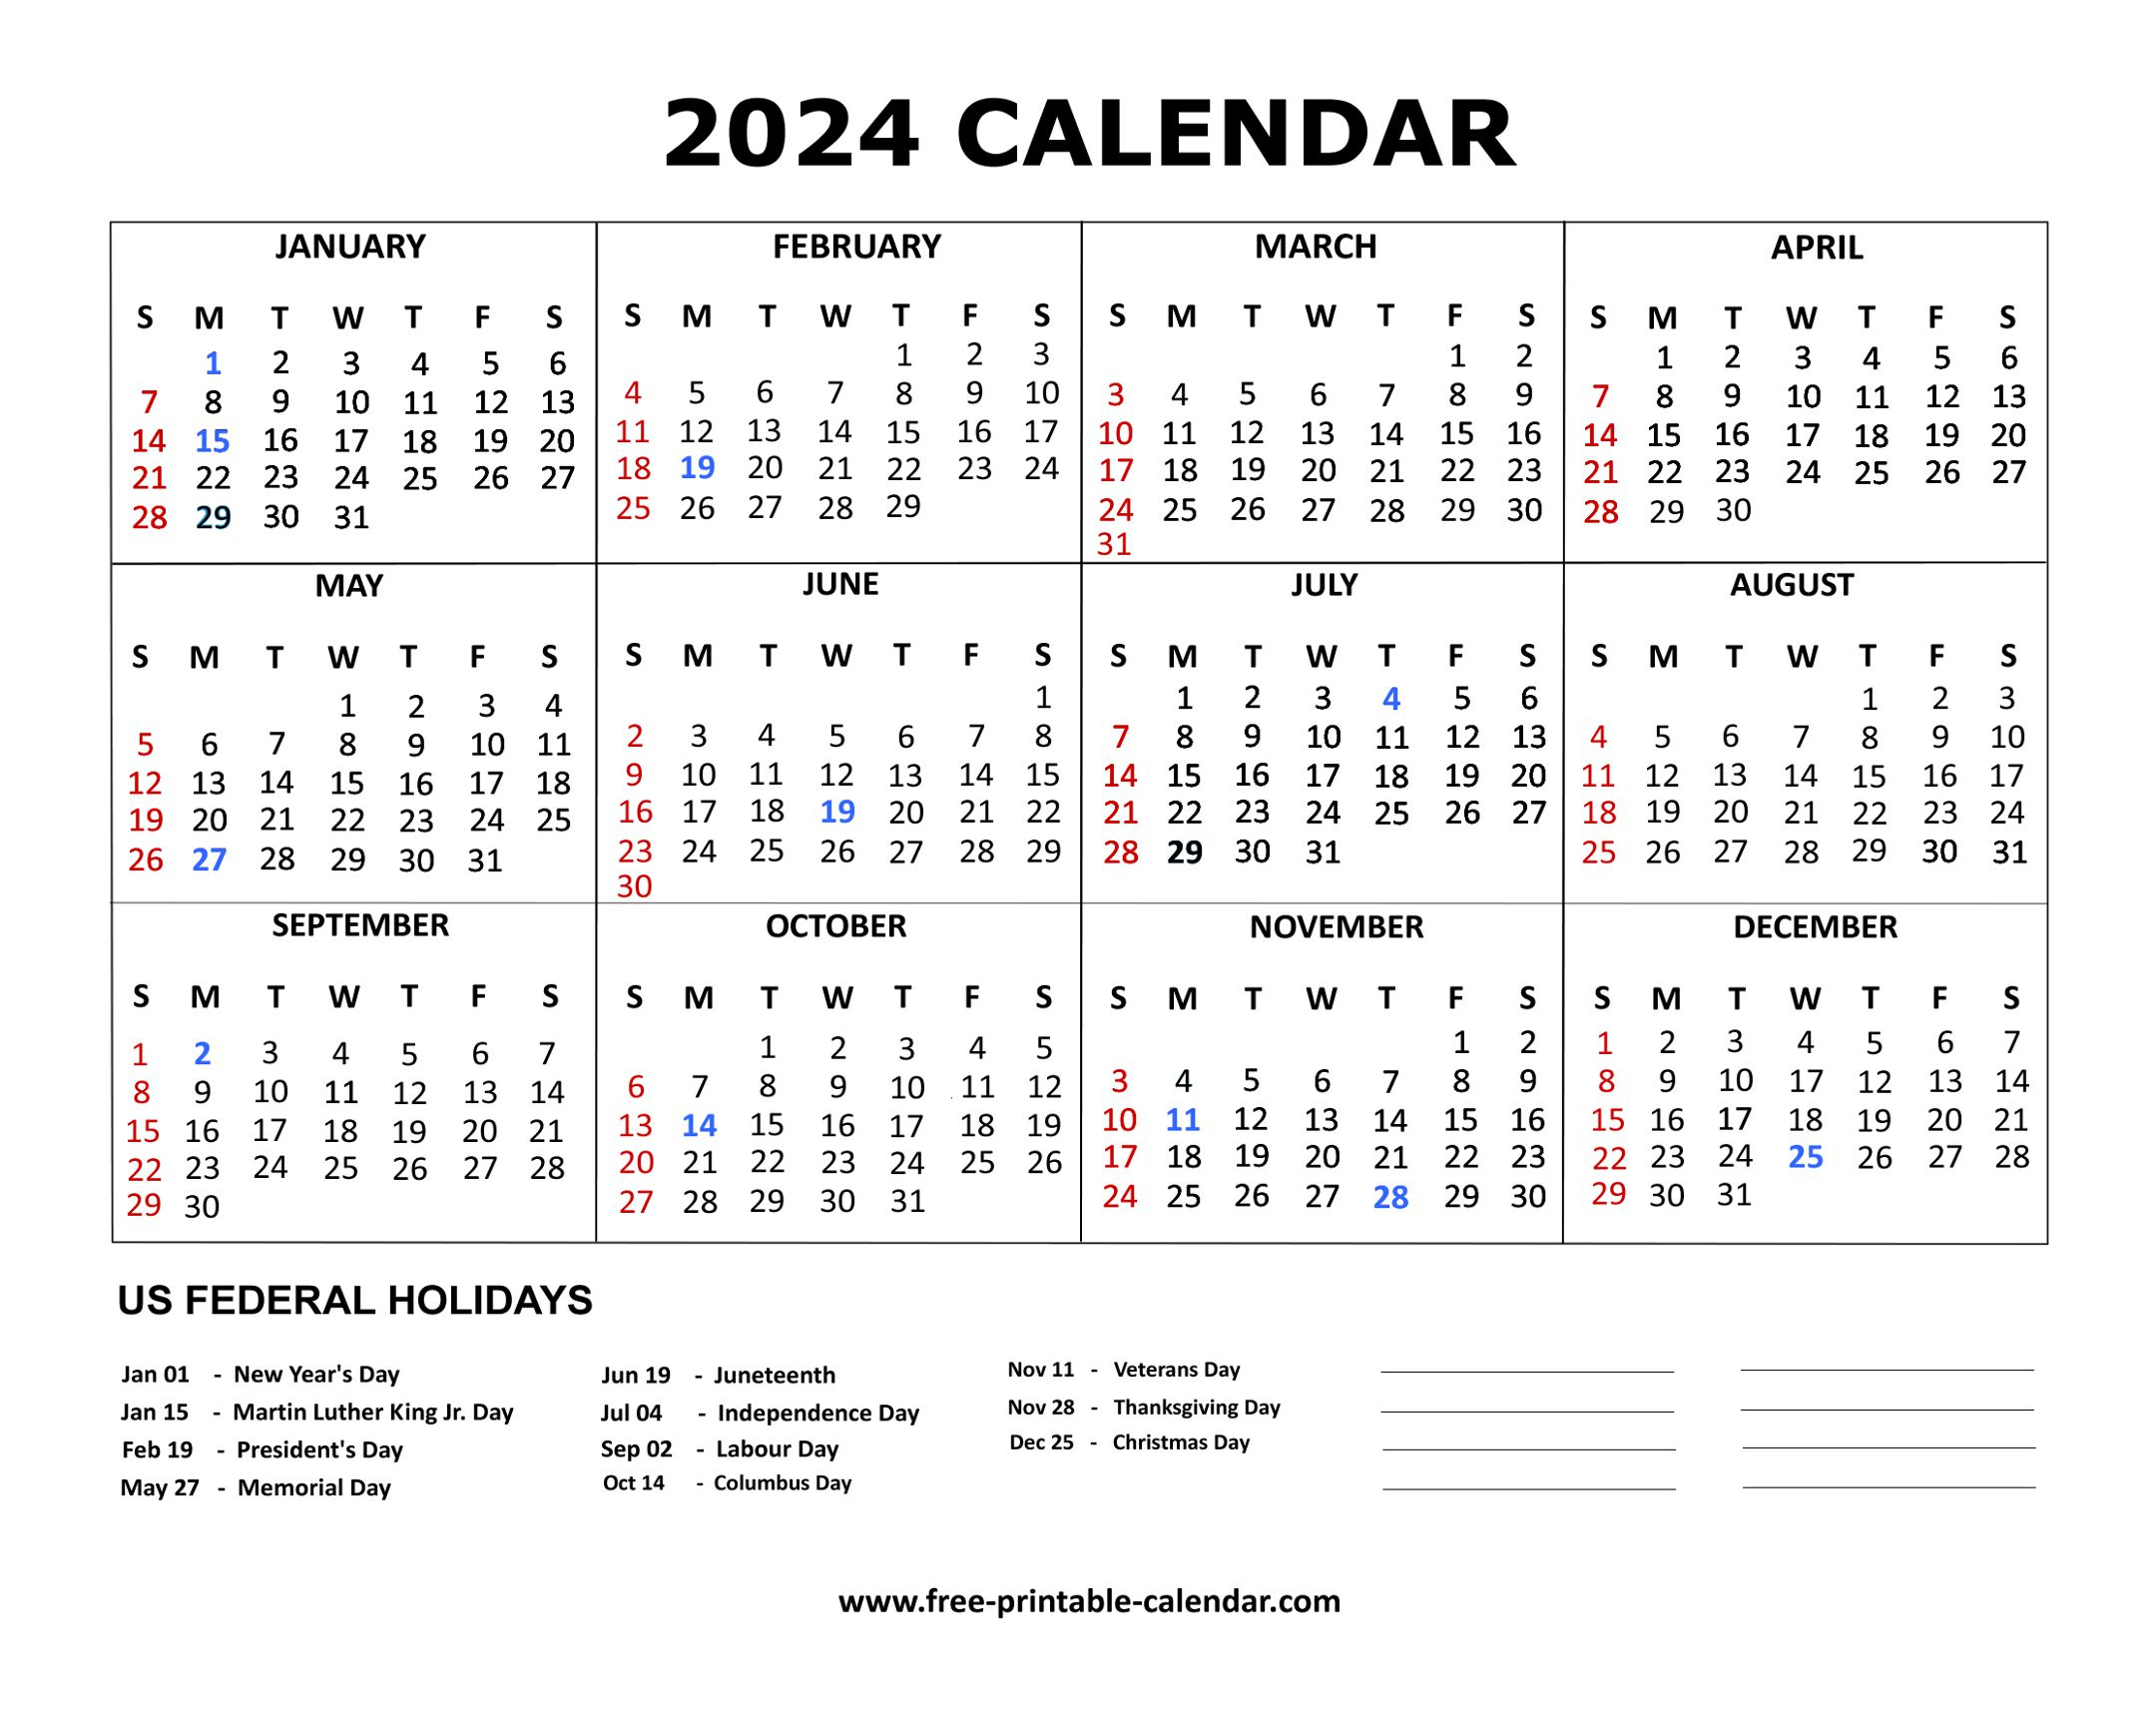 2024 Calendar | Free Printable Calendar 2024 Australia